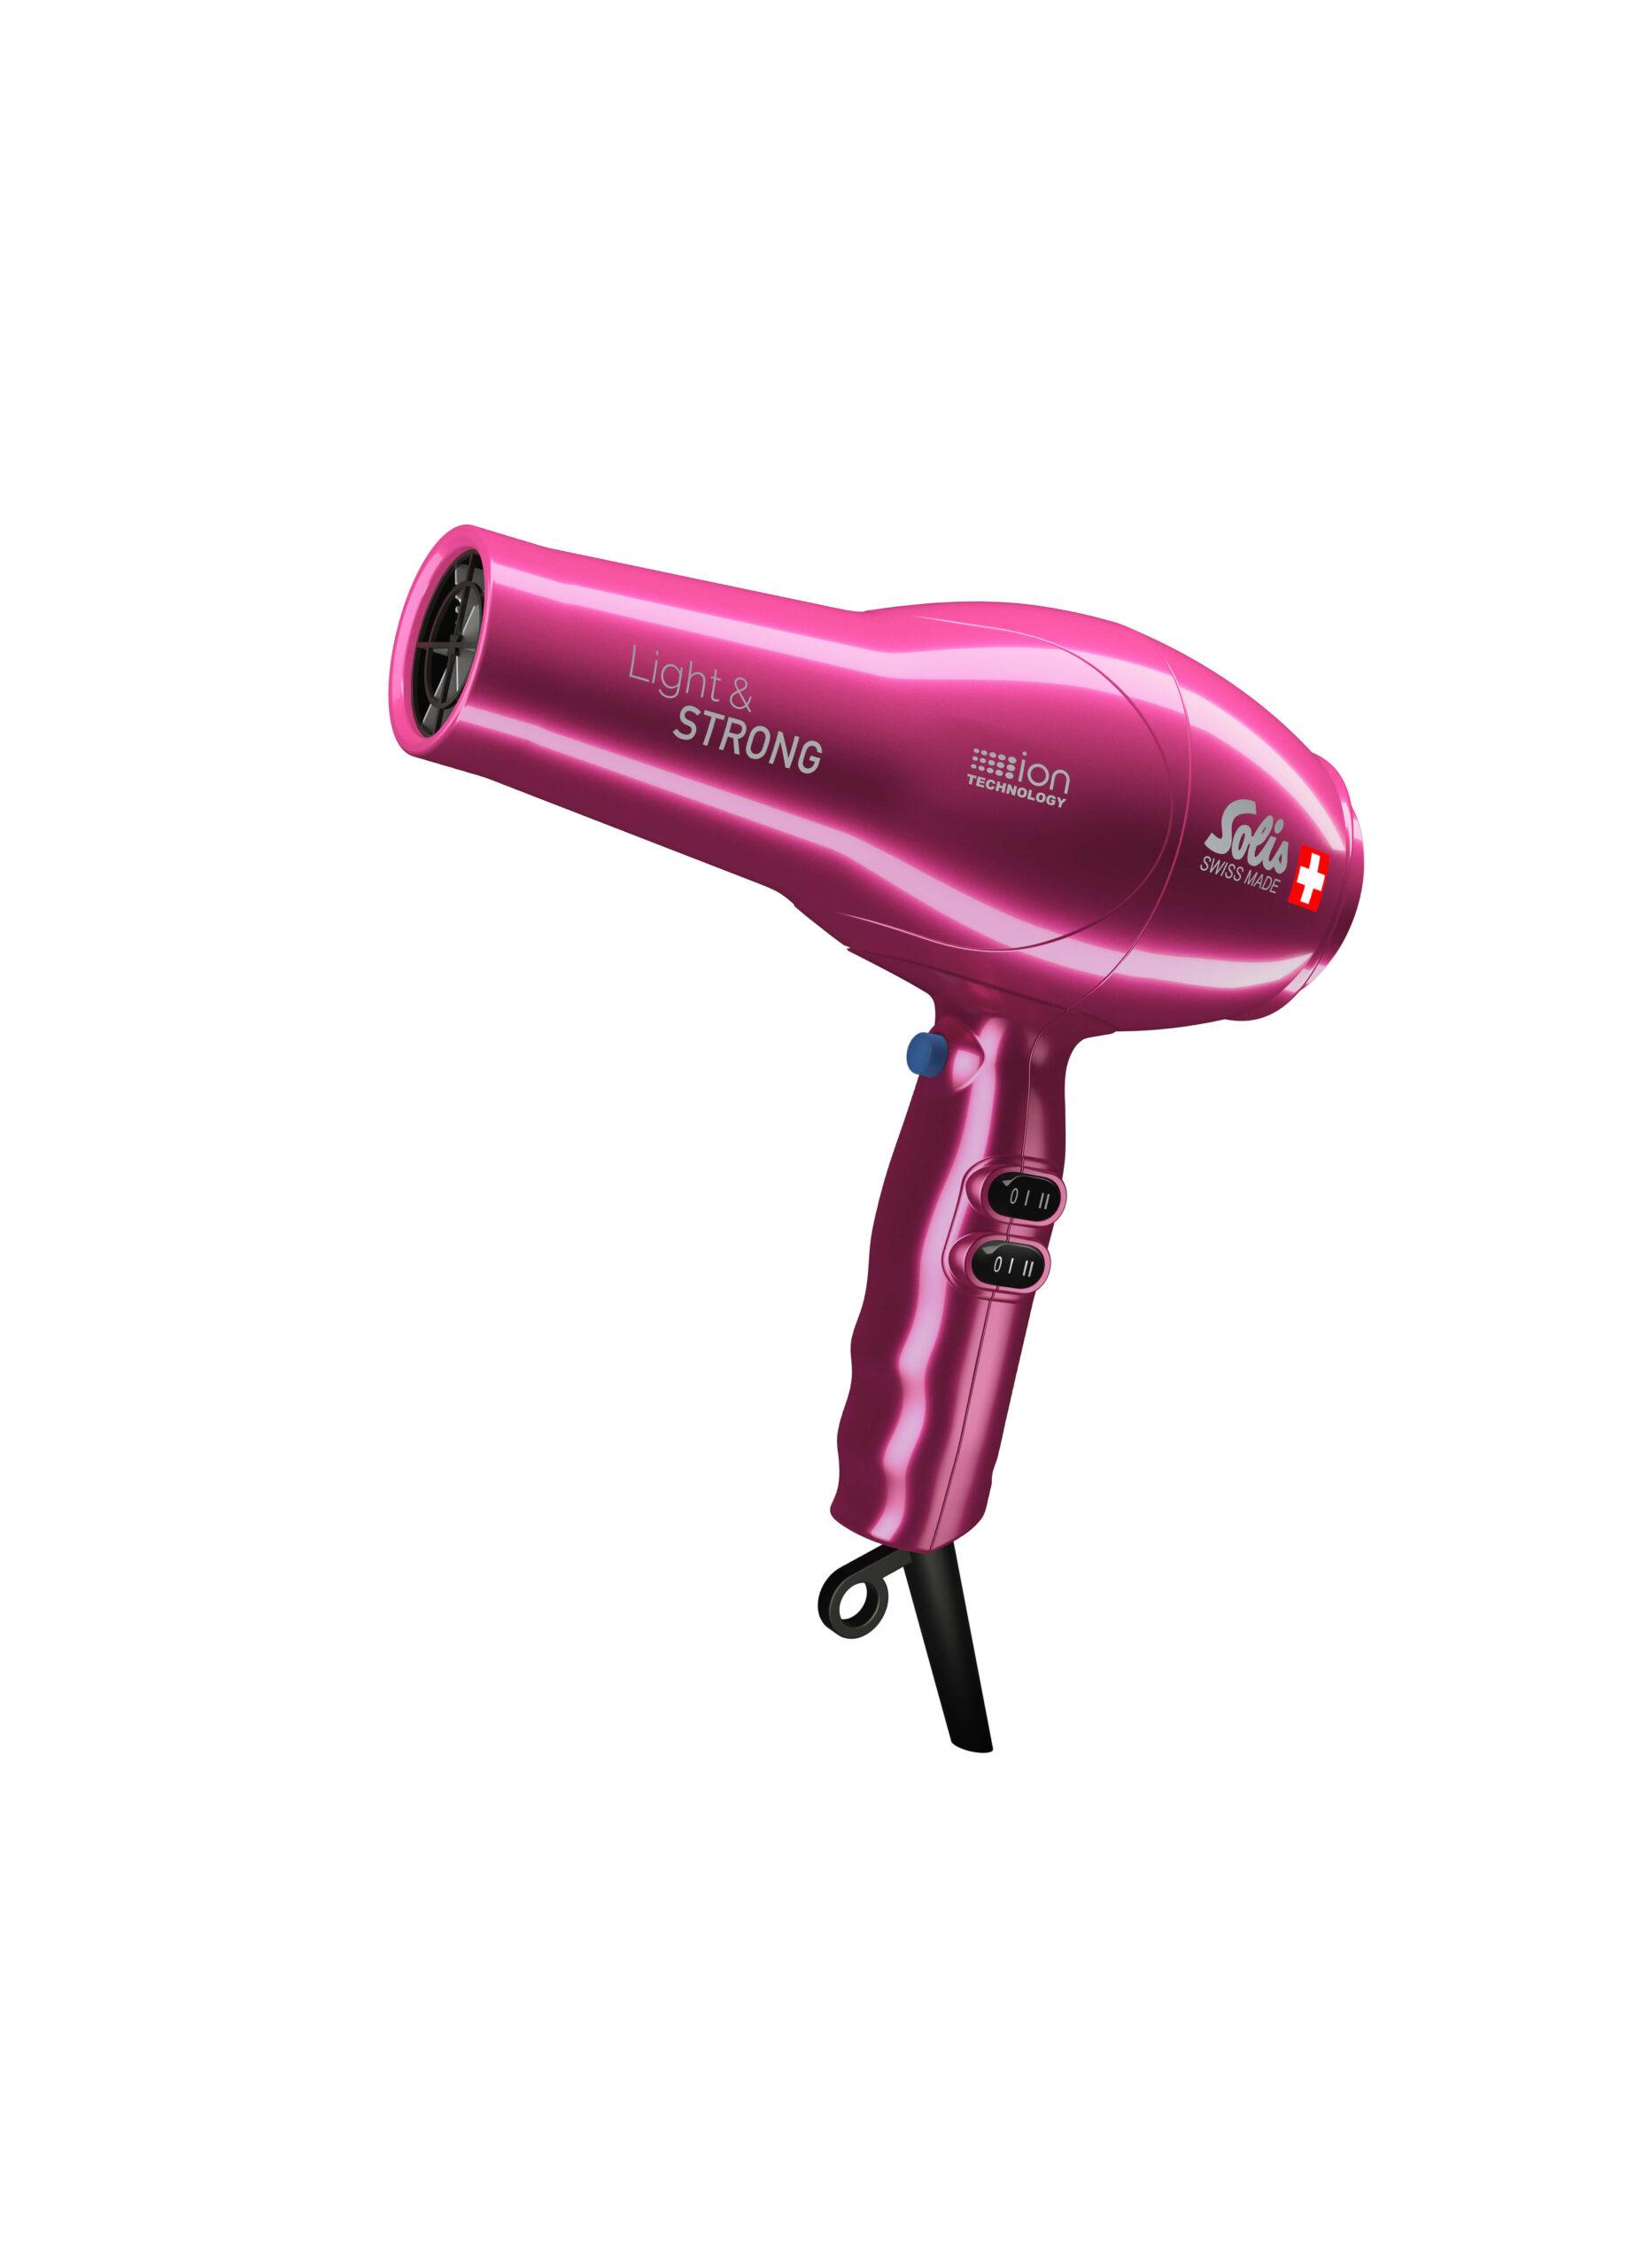 Solis Light & Strong Hair Dryer, Pink, 969.49